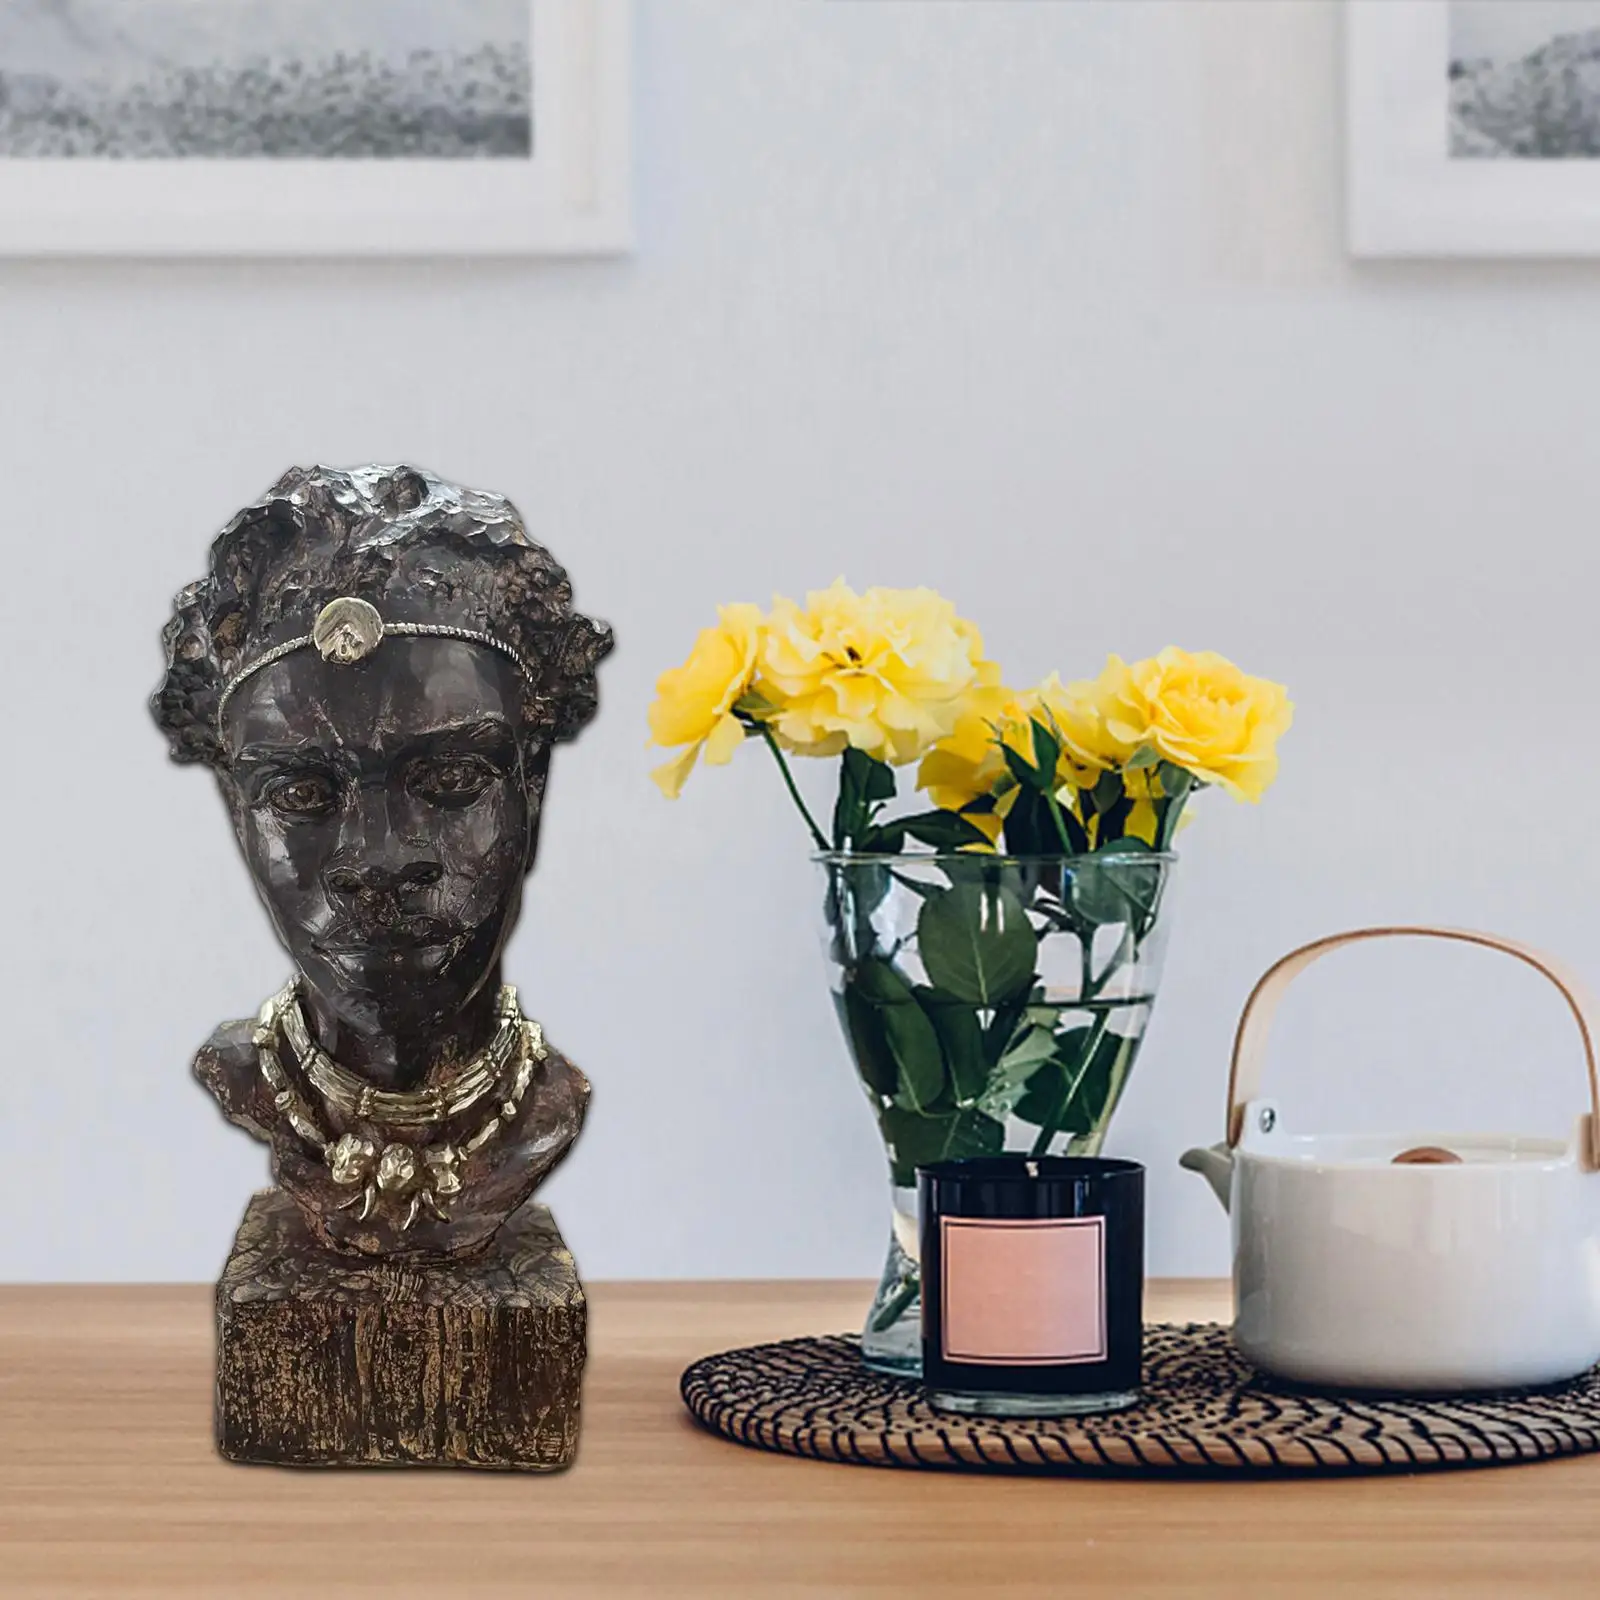 Resin Figurines Decorative Vintage Style Crafts Home Decor Creative African Statue Sculpture for Desktop Office Bedroom Bathroom